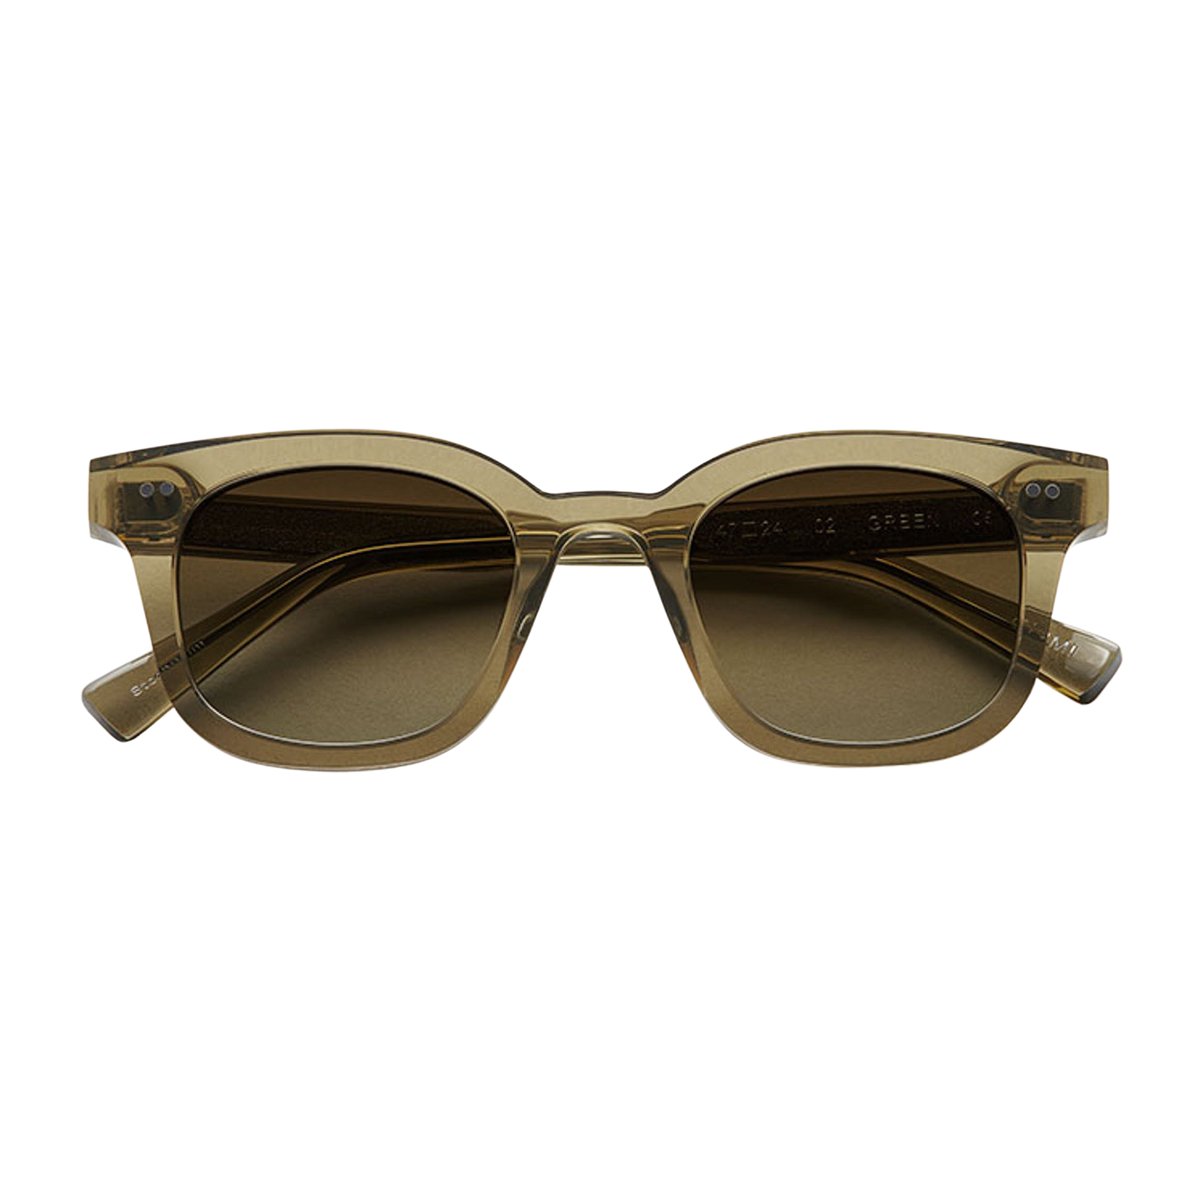 Chimi Eyewear Model 02 Green Gradient Lenses Sunglasses 47mm Feature